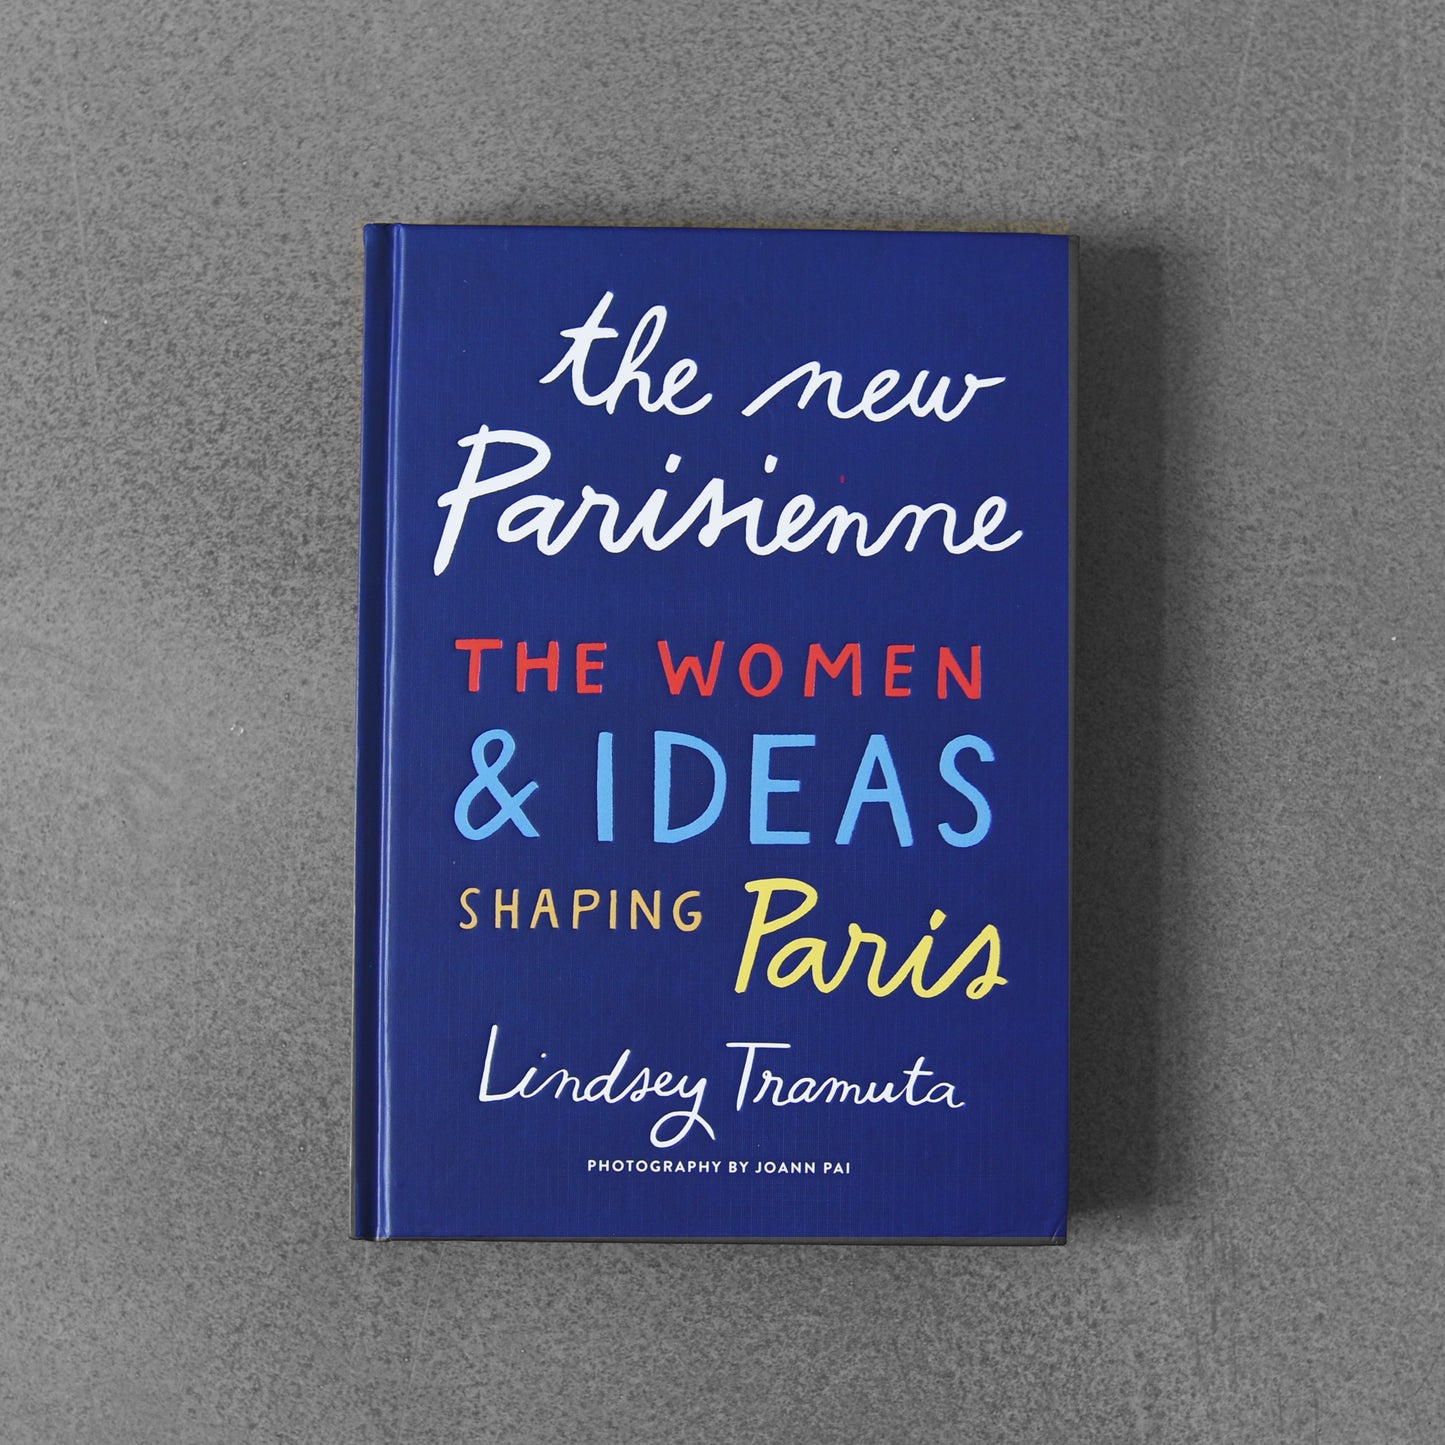 The New Parisienne: The Women & Ideas Shaping Paris - Lindsey Tramuta